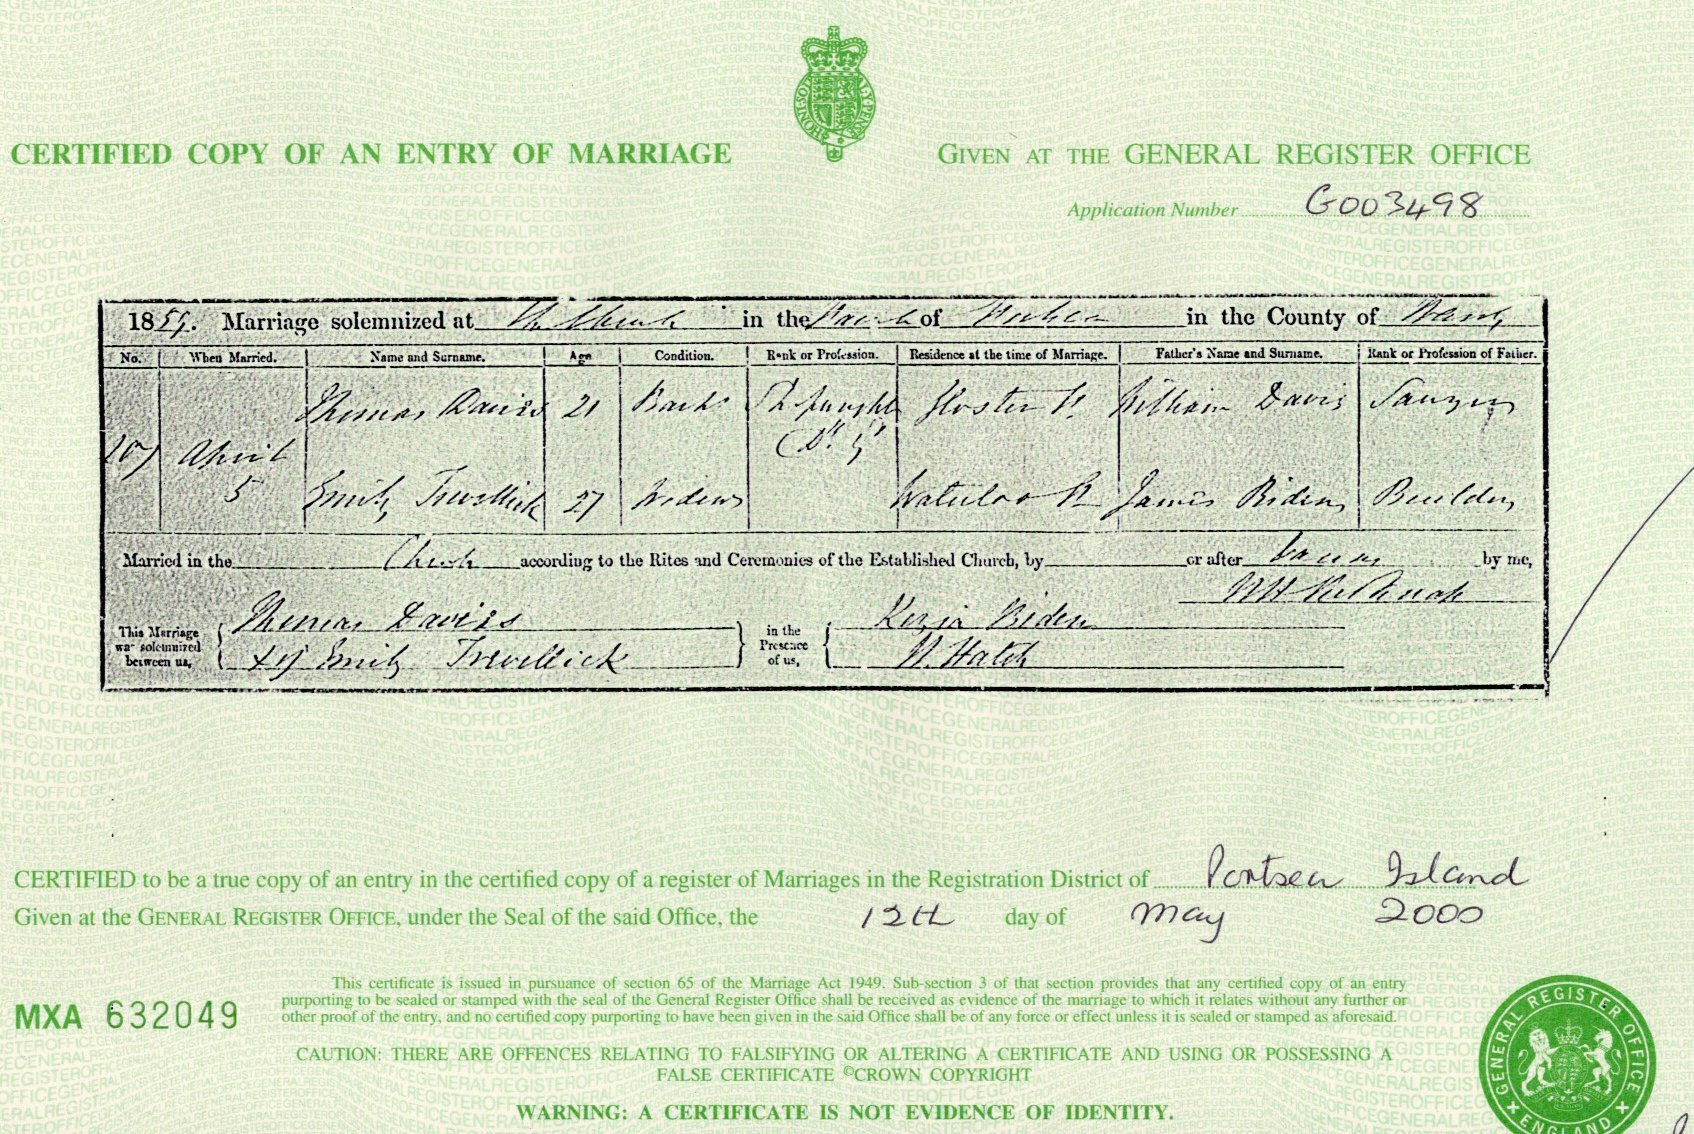 The marriage certificate of Emily Biden